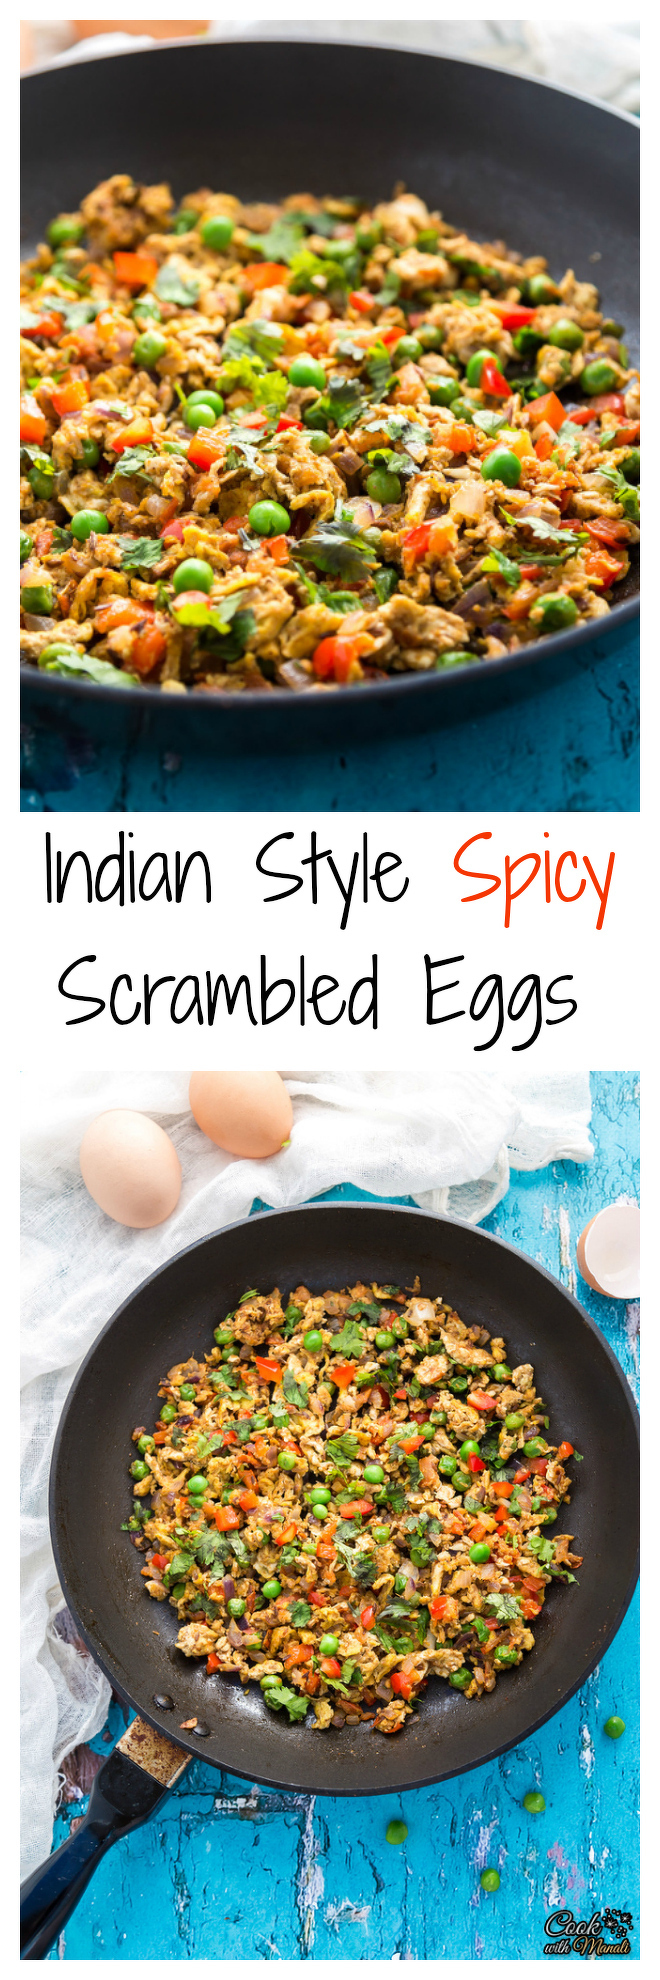 Indian-Spicy-Scrambled-Eggs-Collage-nocwm